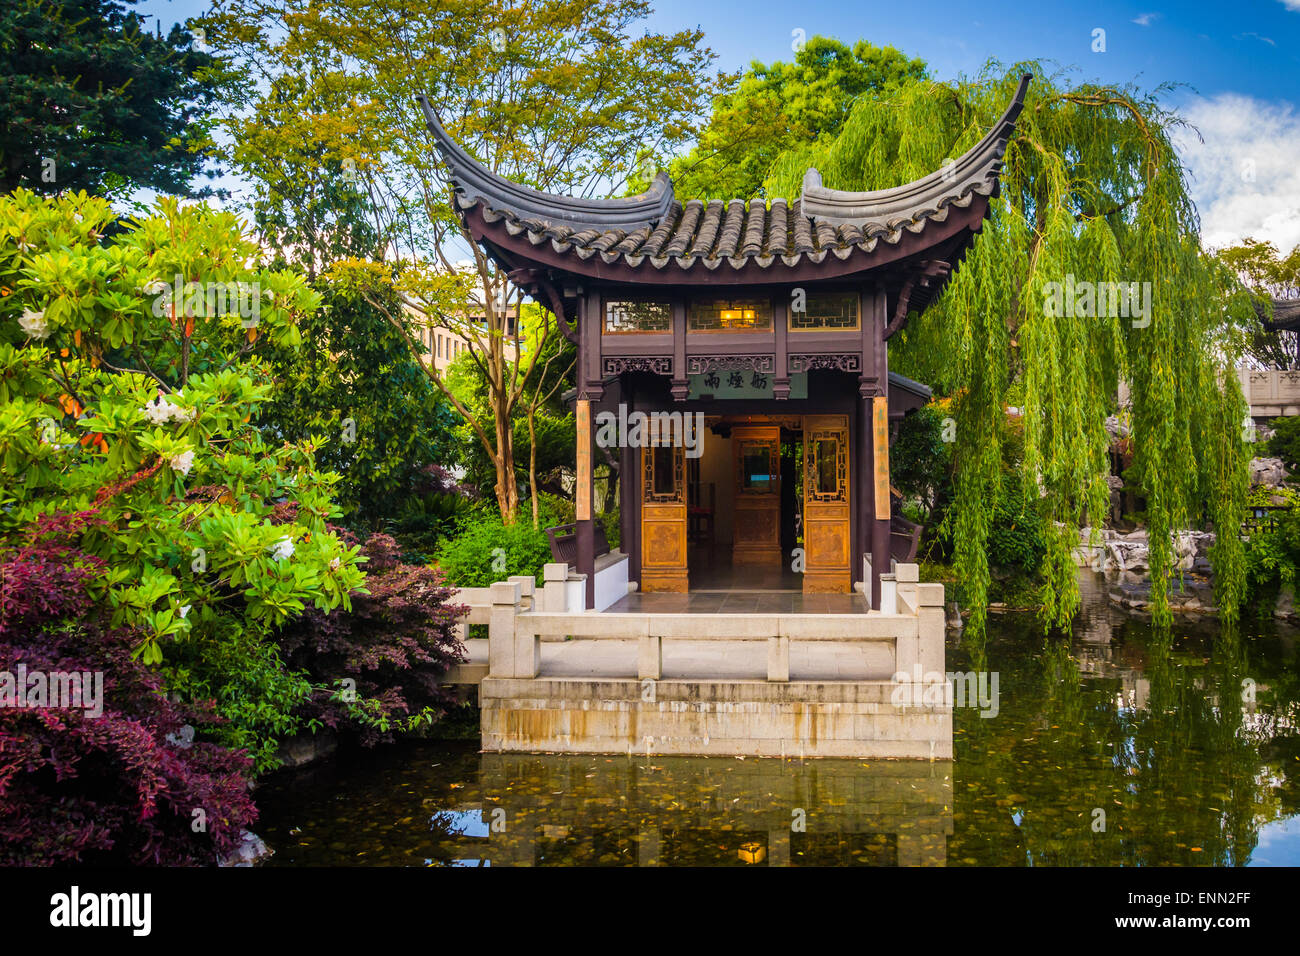 Pagoda at the Lan Su Chinese Garden, in Portland, Oregon. Stock Photo